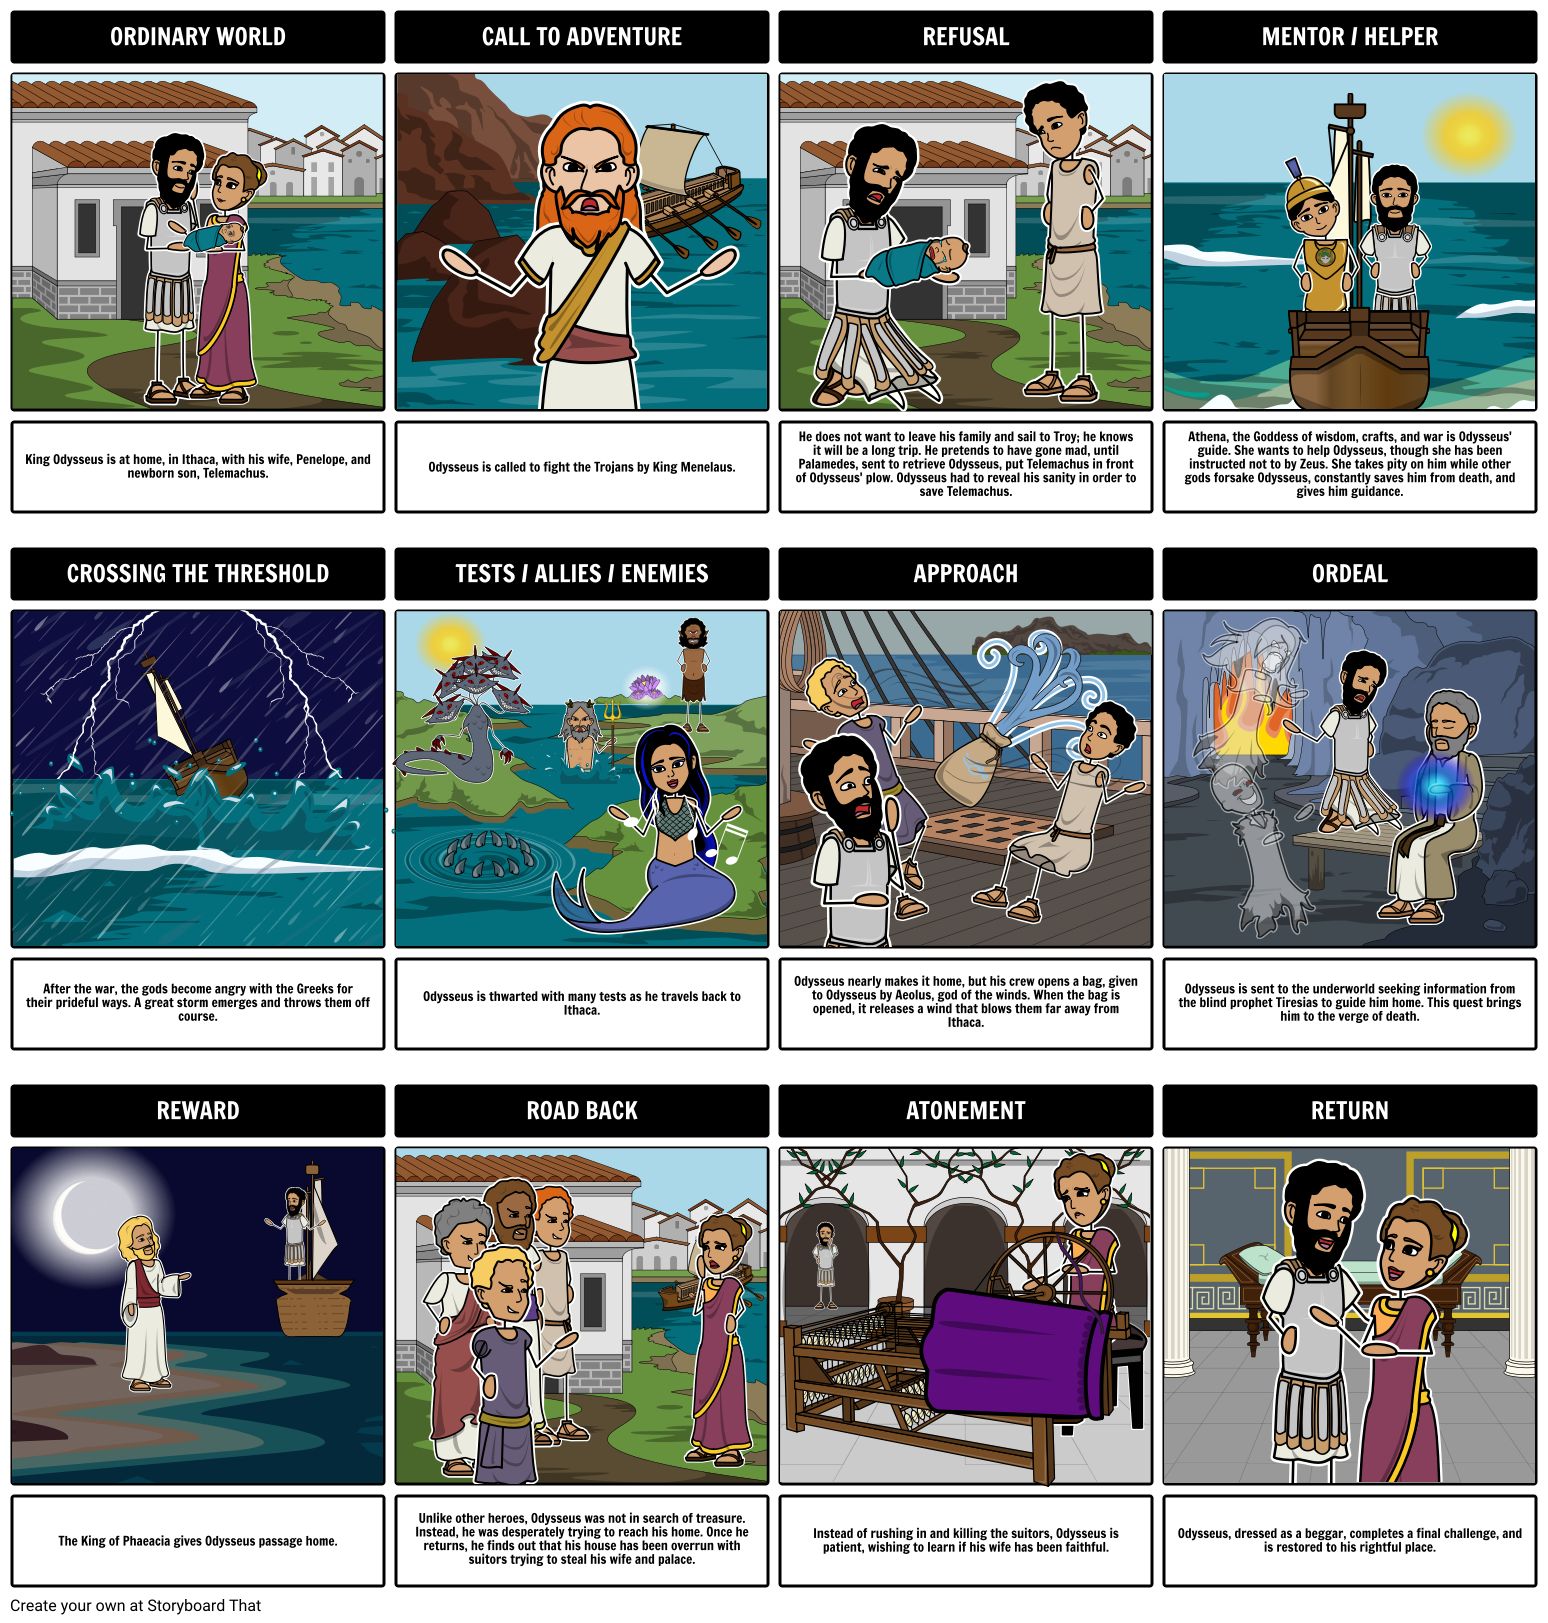 The Odyssey Heroic Journey - Examples of hero's journey